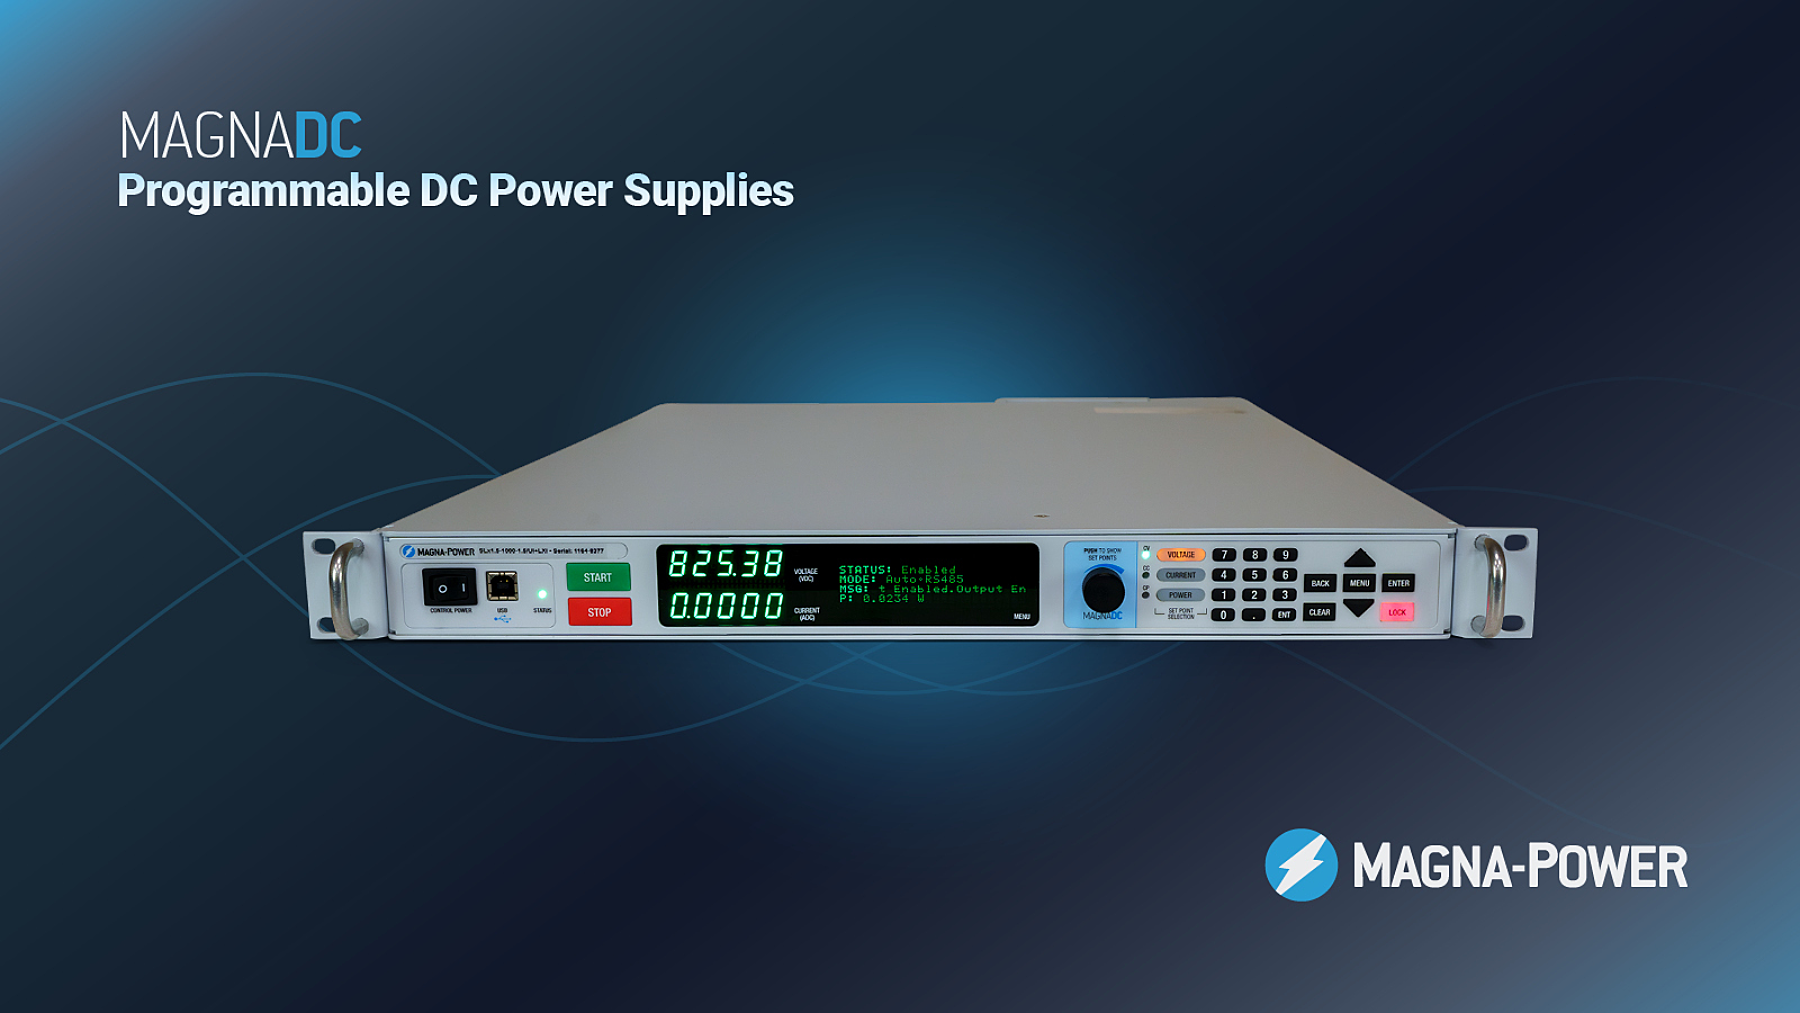 Magna-Power's new SLx Series next-generation 1U programmable DC power supply